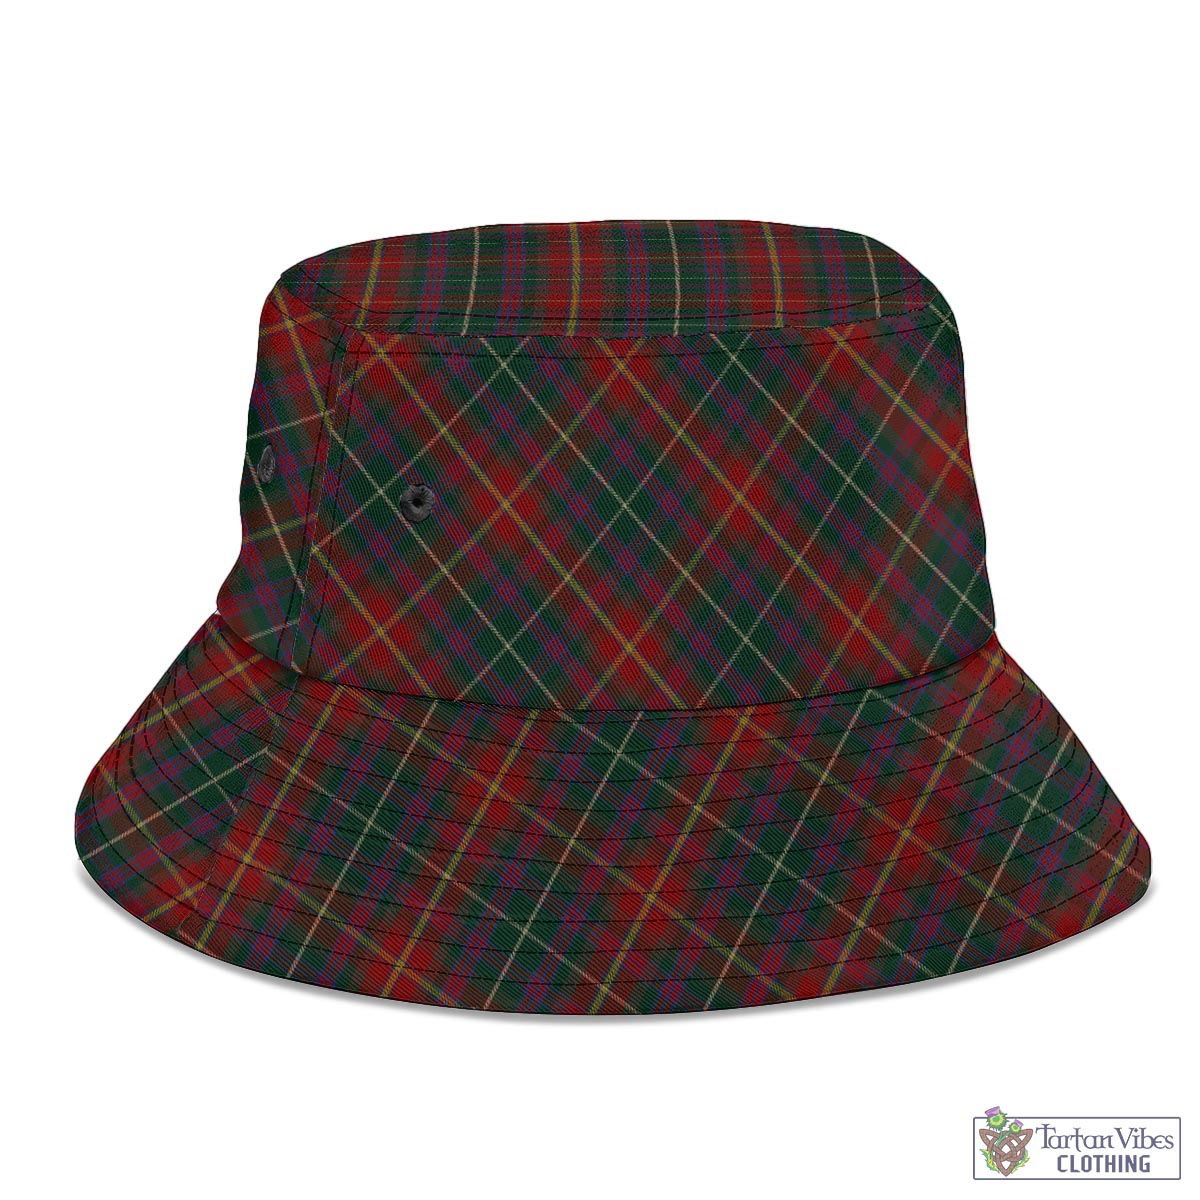 Tartan Vibes Clothing Meath County Ireland Tartan Bucket Hat